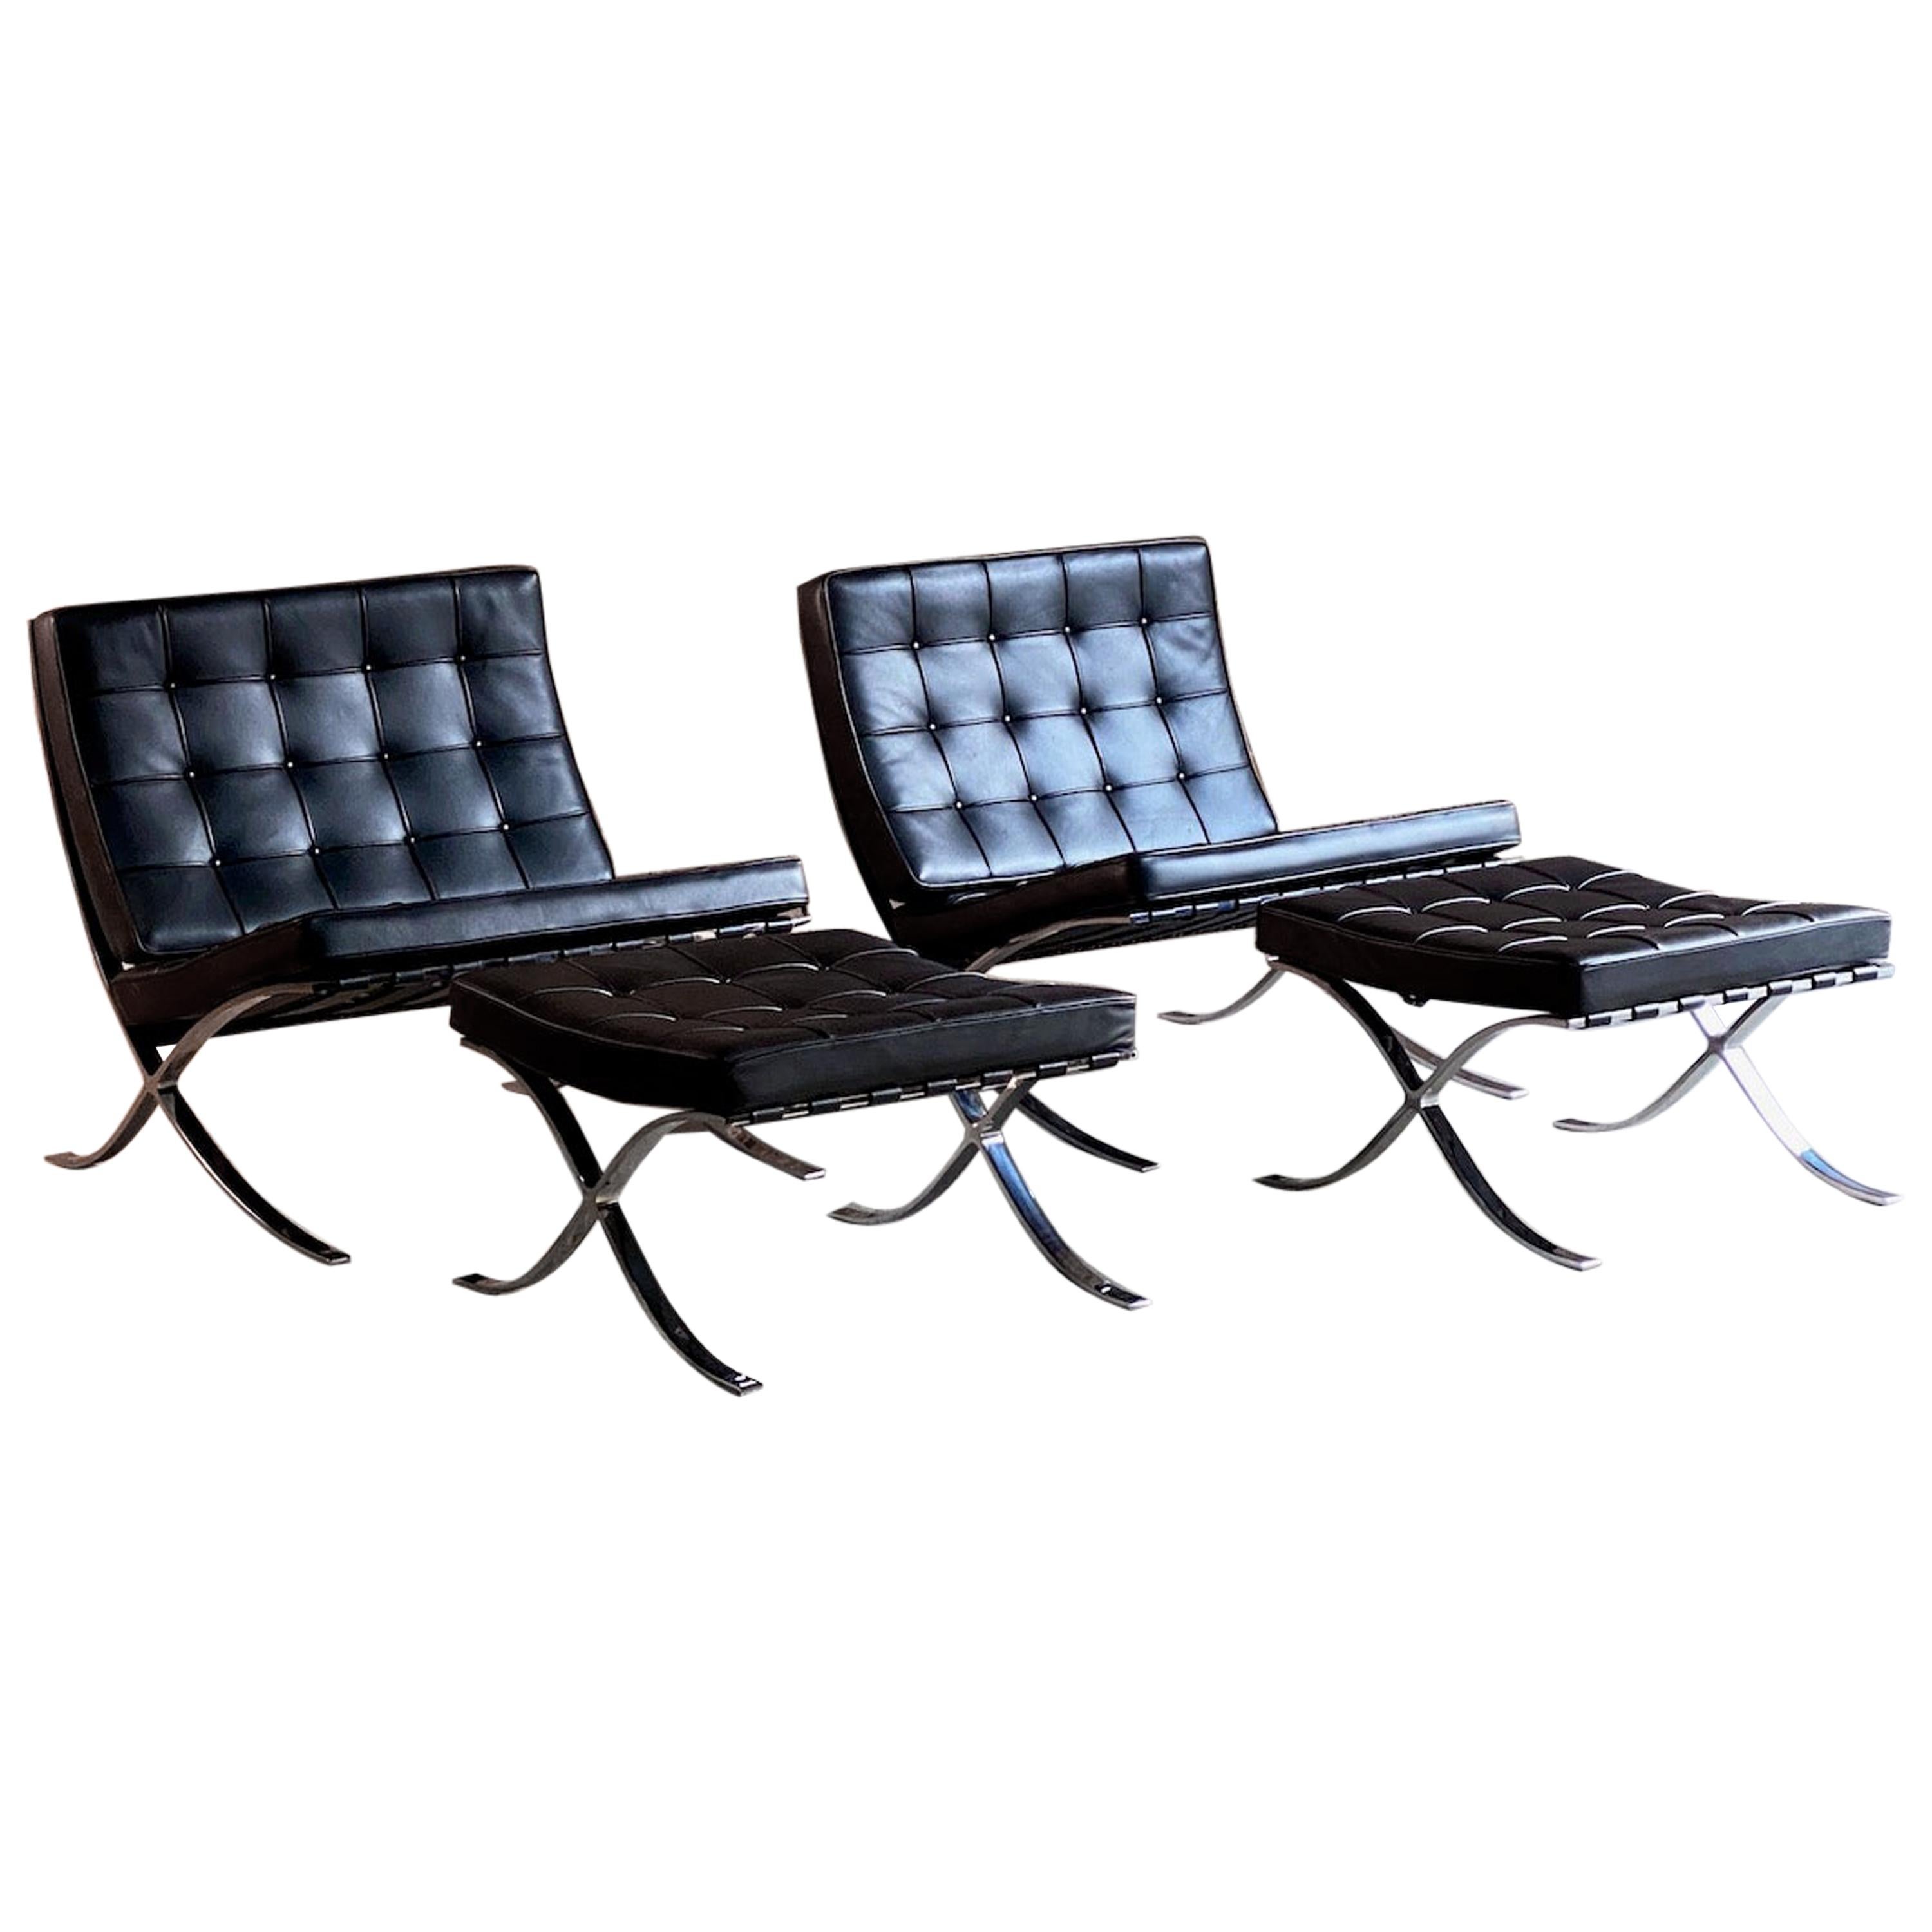 Barcelona Chairs & Stools by Knoll Studio Mies van der Rohe, USA, circa 2014